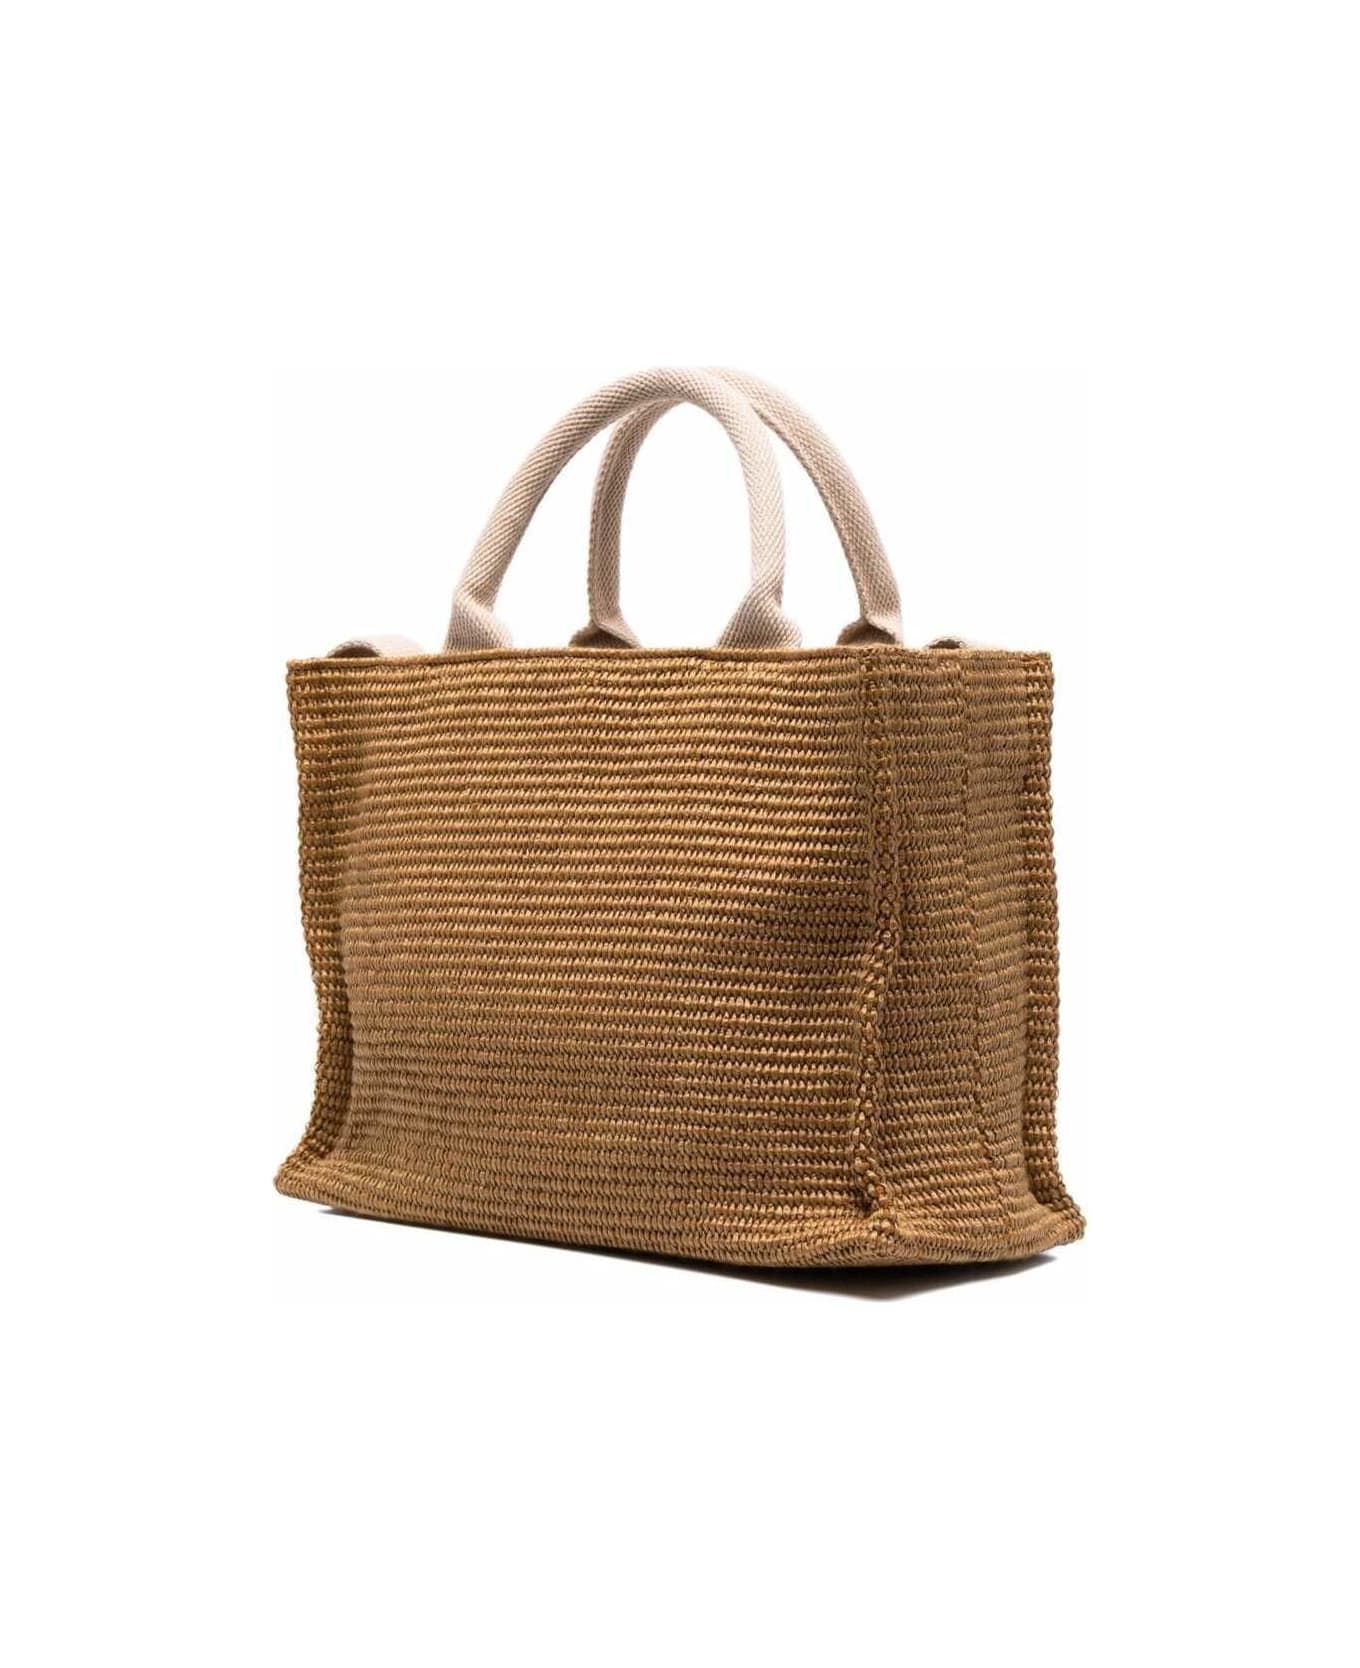 Marni Woman's Beige Raffia Shopping Bag With Logo Print - Beige